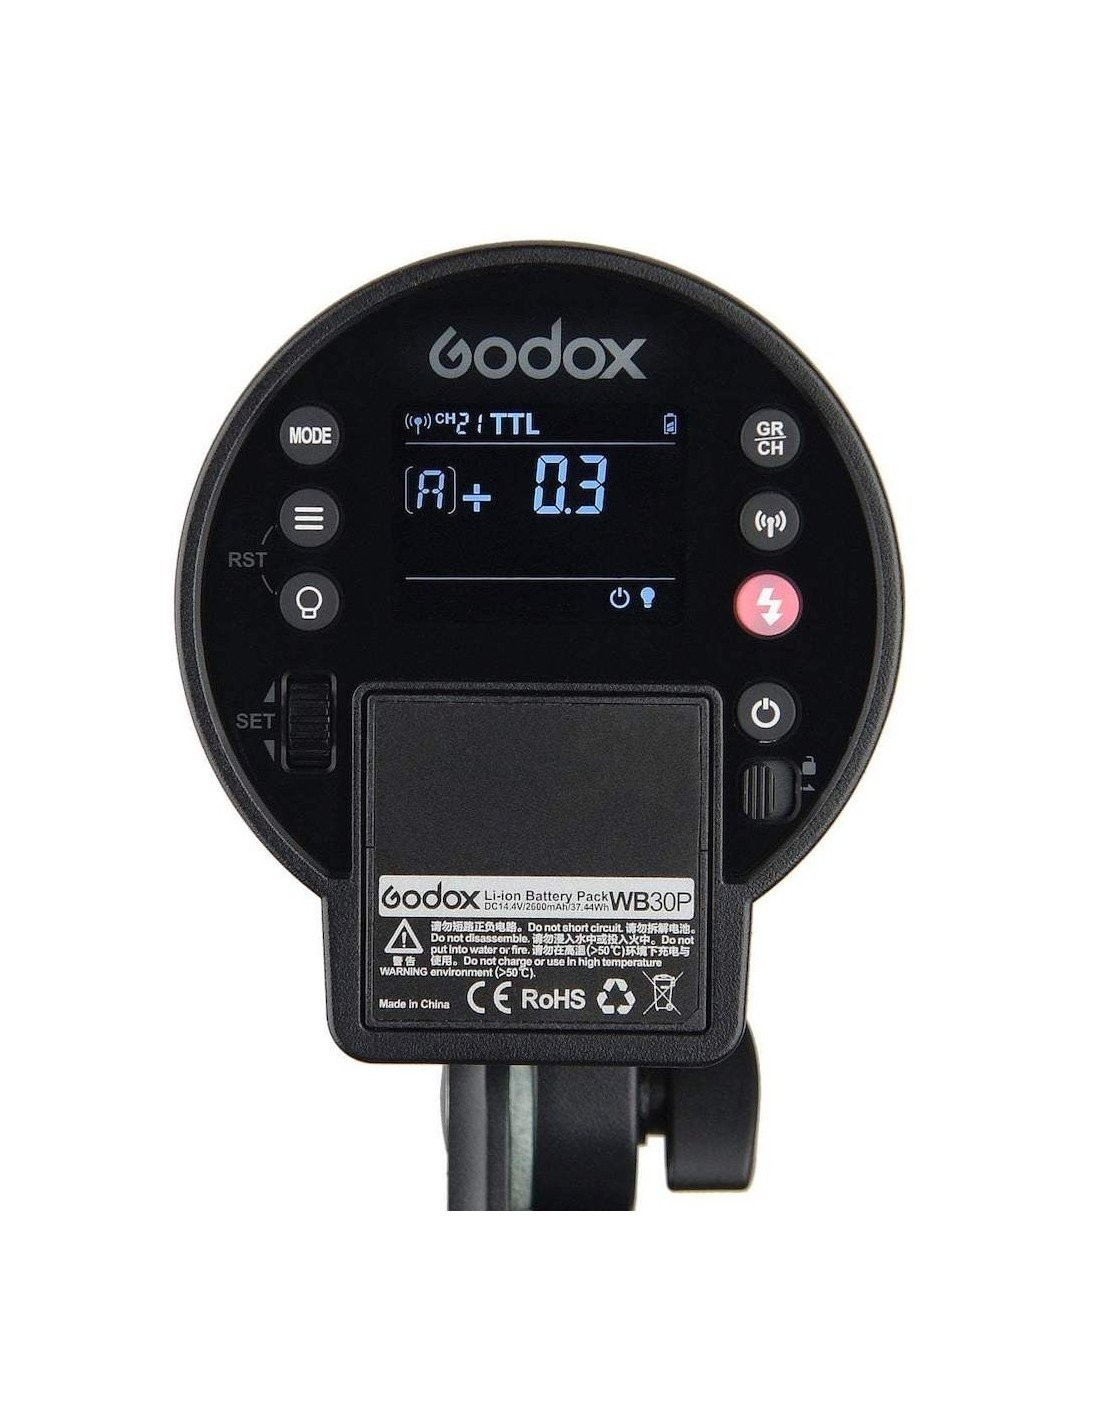 Kit Godox ad300pro y transmisor XPro, el mejor equipo foto exteriores